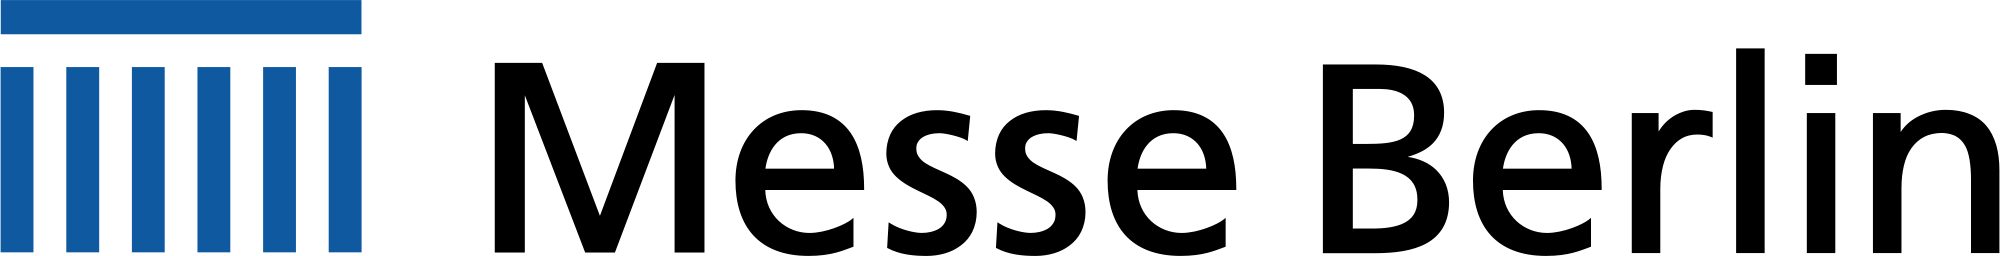 2000px-Messe_Berlin_Logo.svg